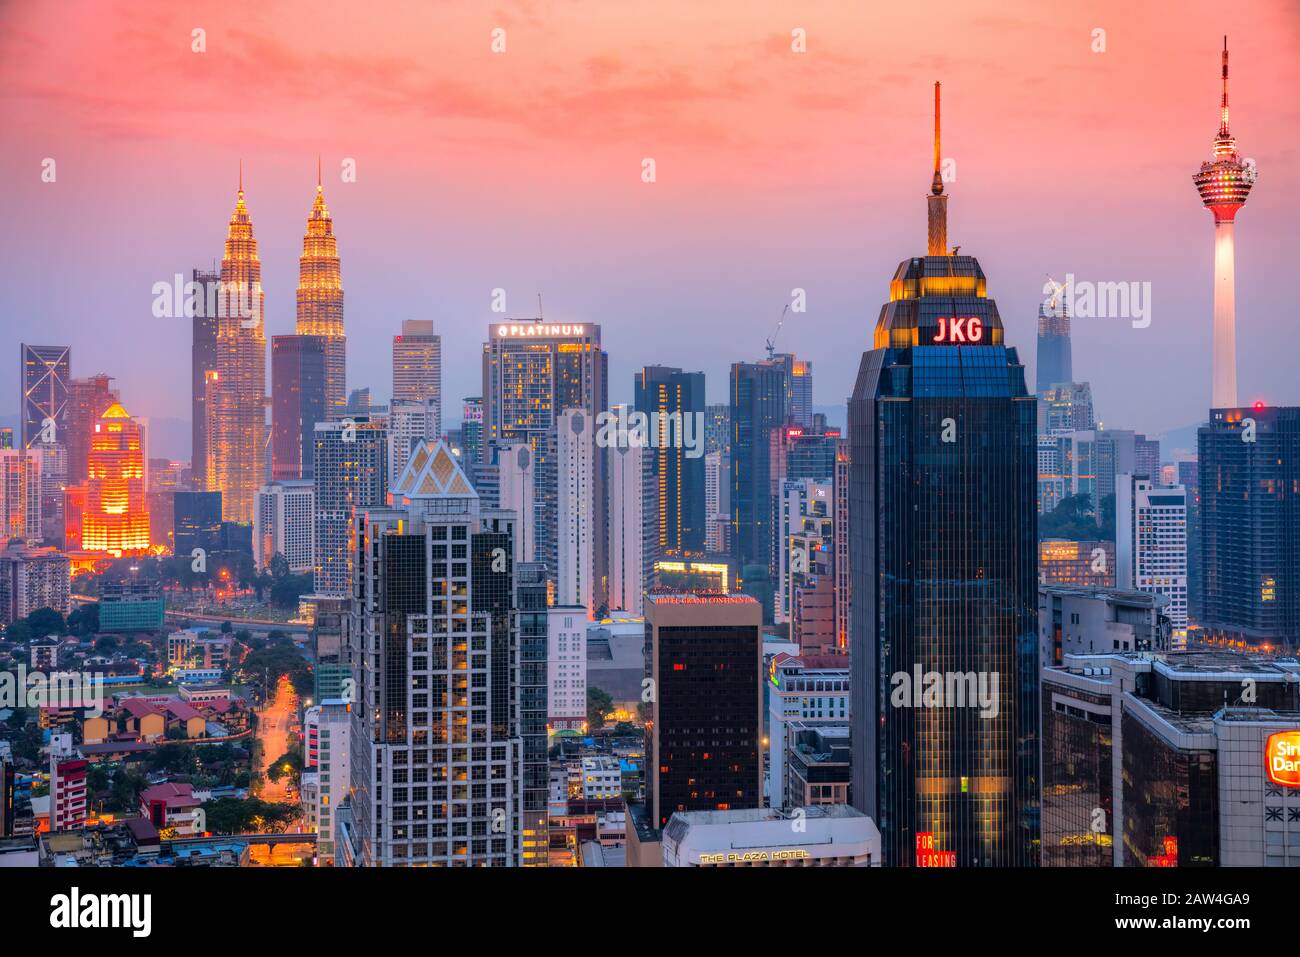 Kuala LUMPUR, MALAYSIA - 19. FEBRUAR 2018: Skyline der Stadt Kuala Lumpur mit den berühmten Petronas-Zwillingstürmen und dem Kl Tower. Stockfoto